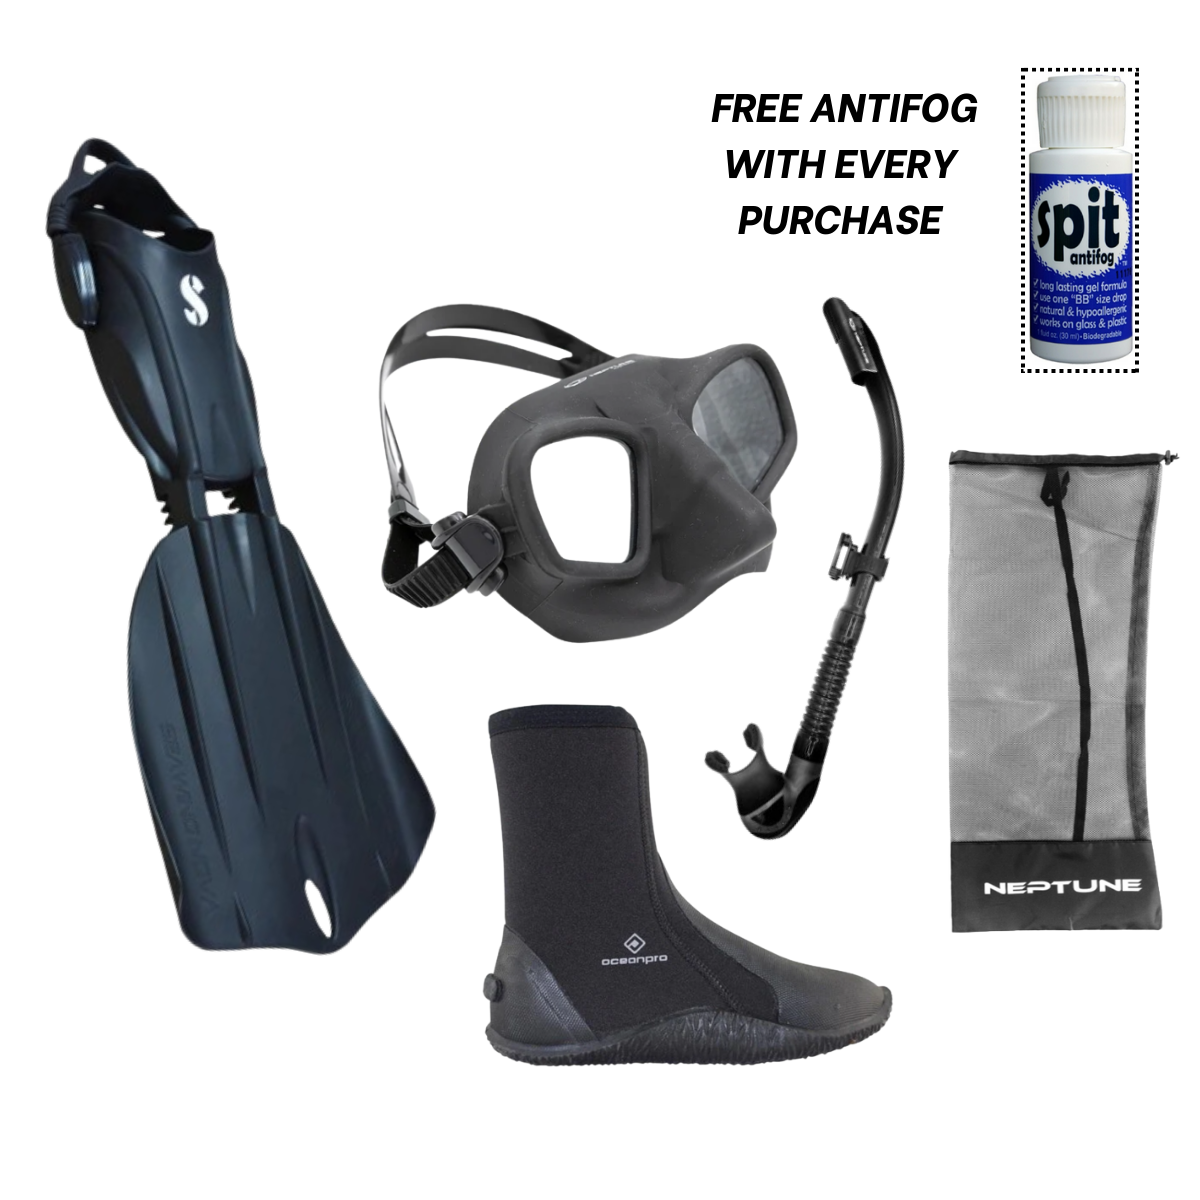 Blitz Mask, Neptune Aruna Easyclear Snorkel With Splash Guard, Seawing Nova Fins, Boots & Bag With Free Anti-fog